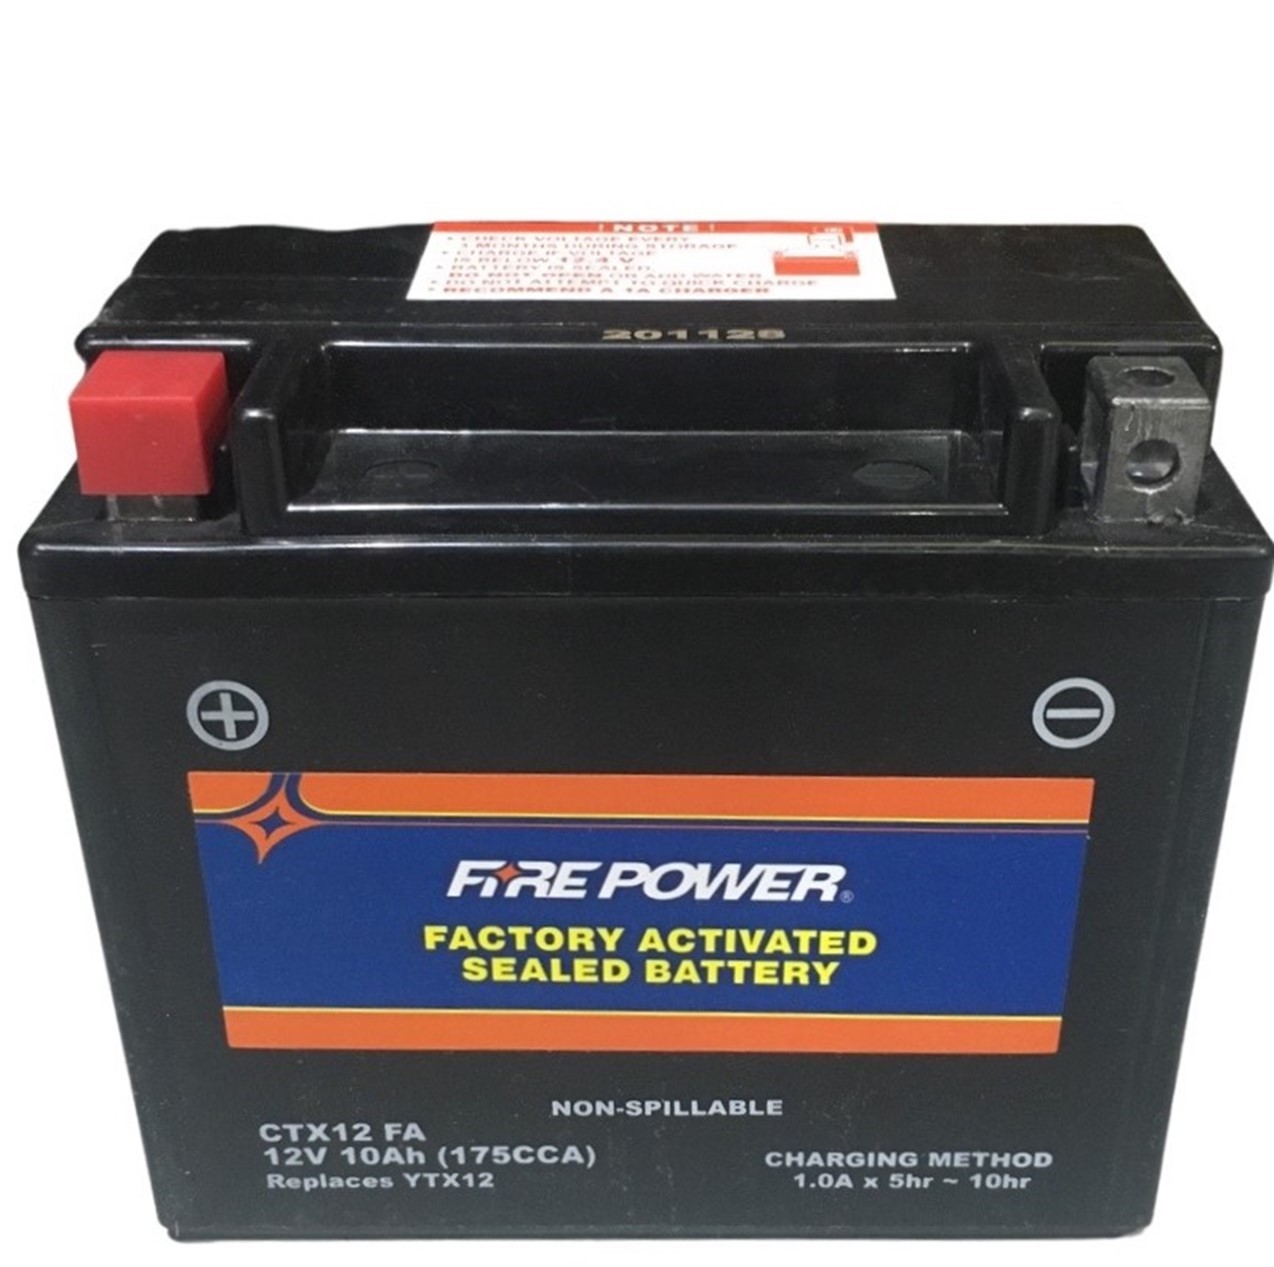 CTX12 FA Fire Power Battery L=5 3/4" W=3 1/4" H=5"